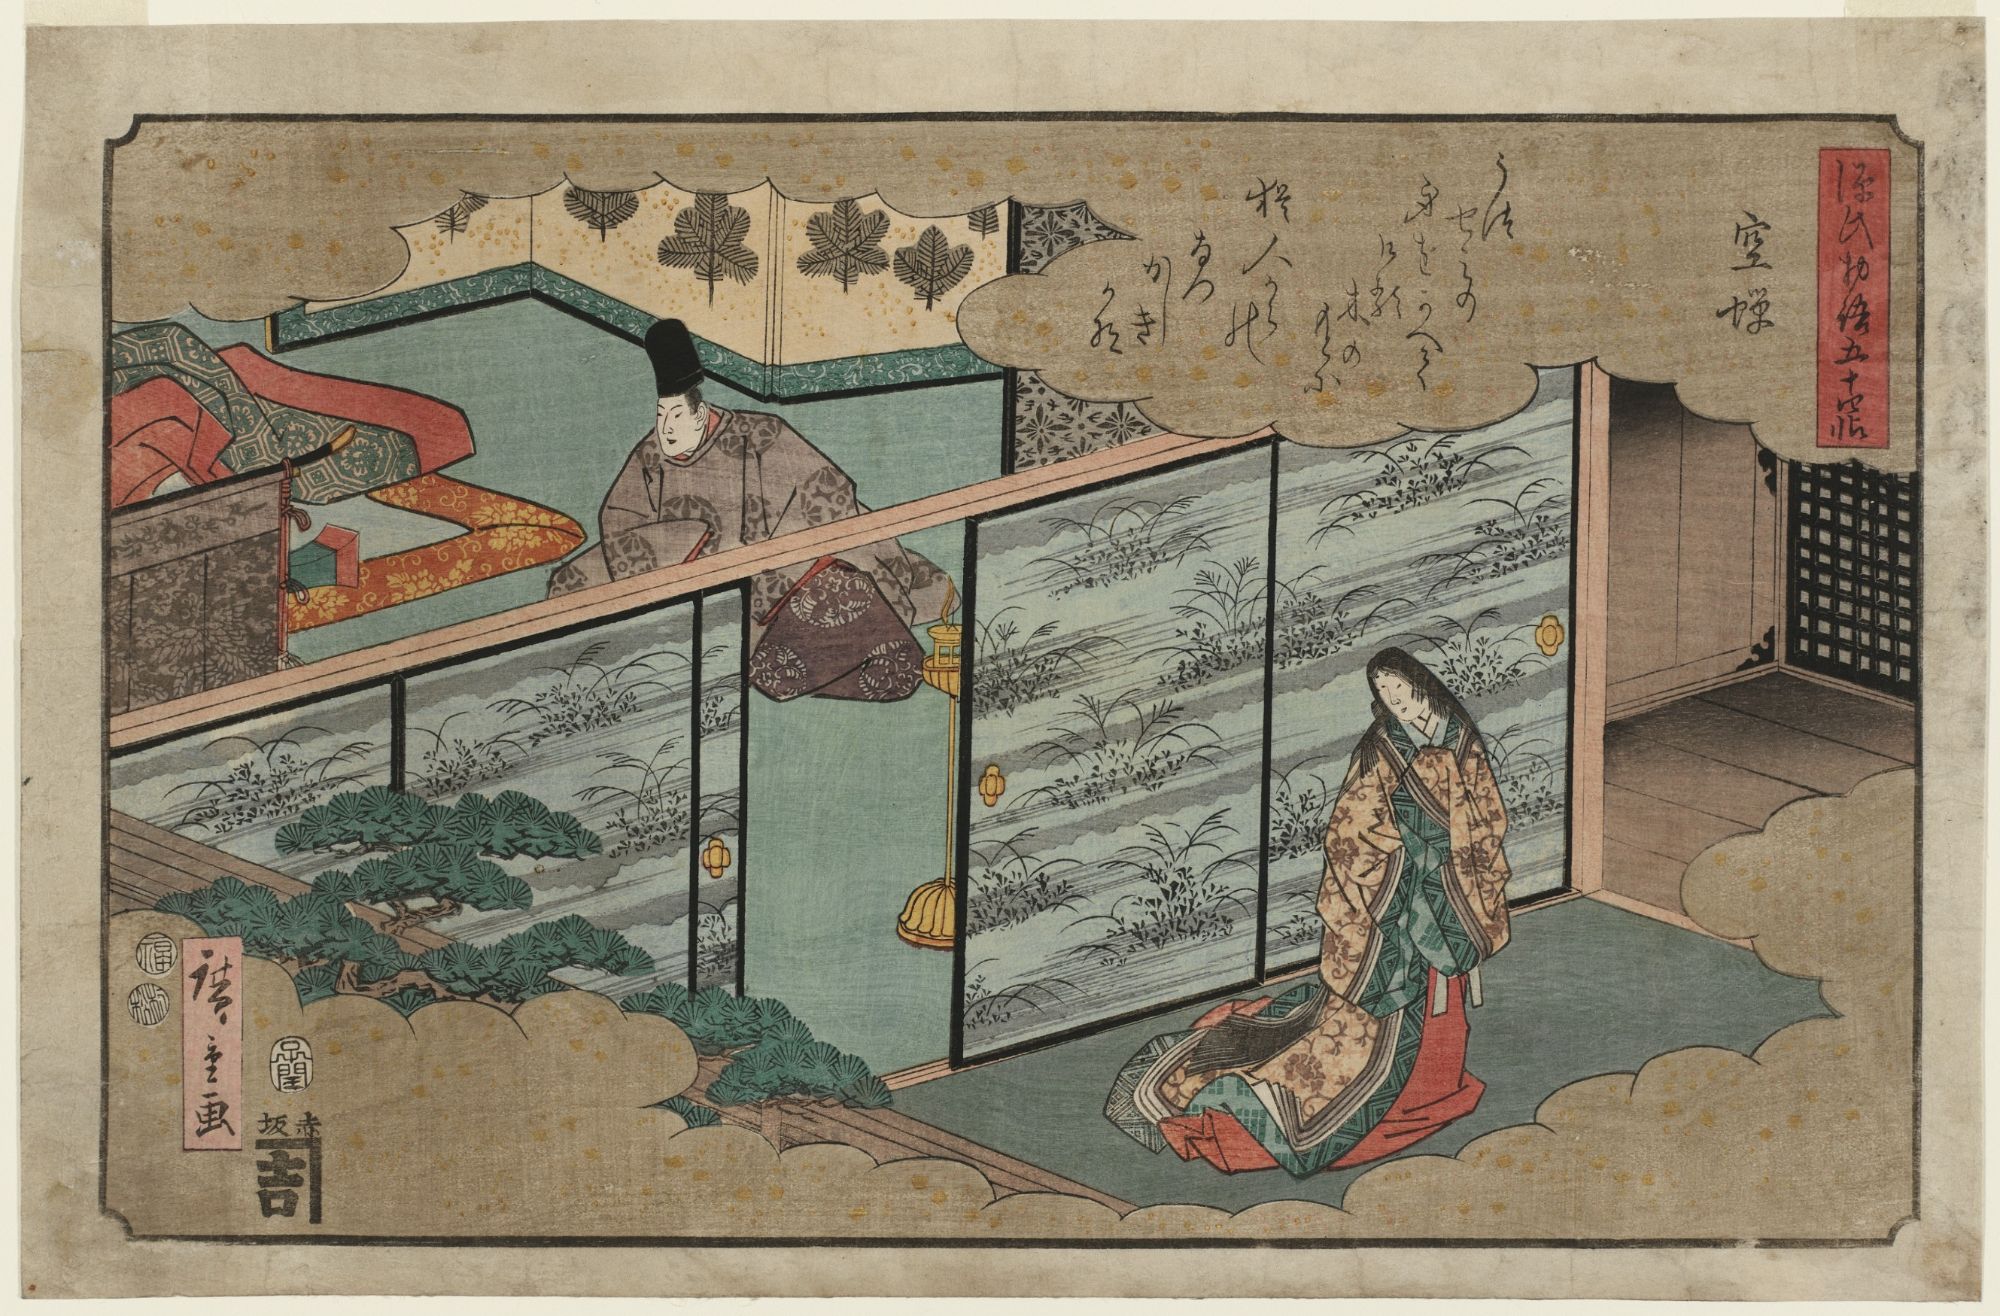 Utagawa Hiroshige: Utsusemi, from the series The Fifty-four